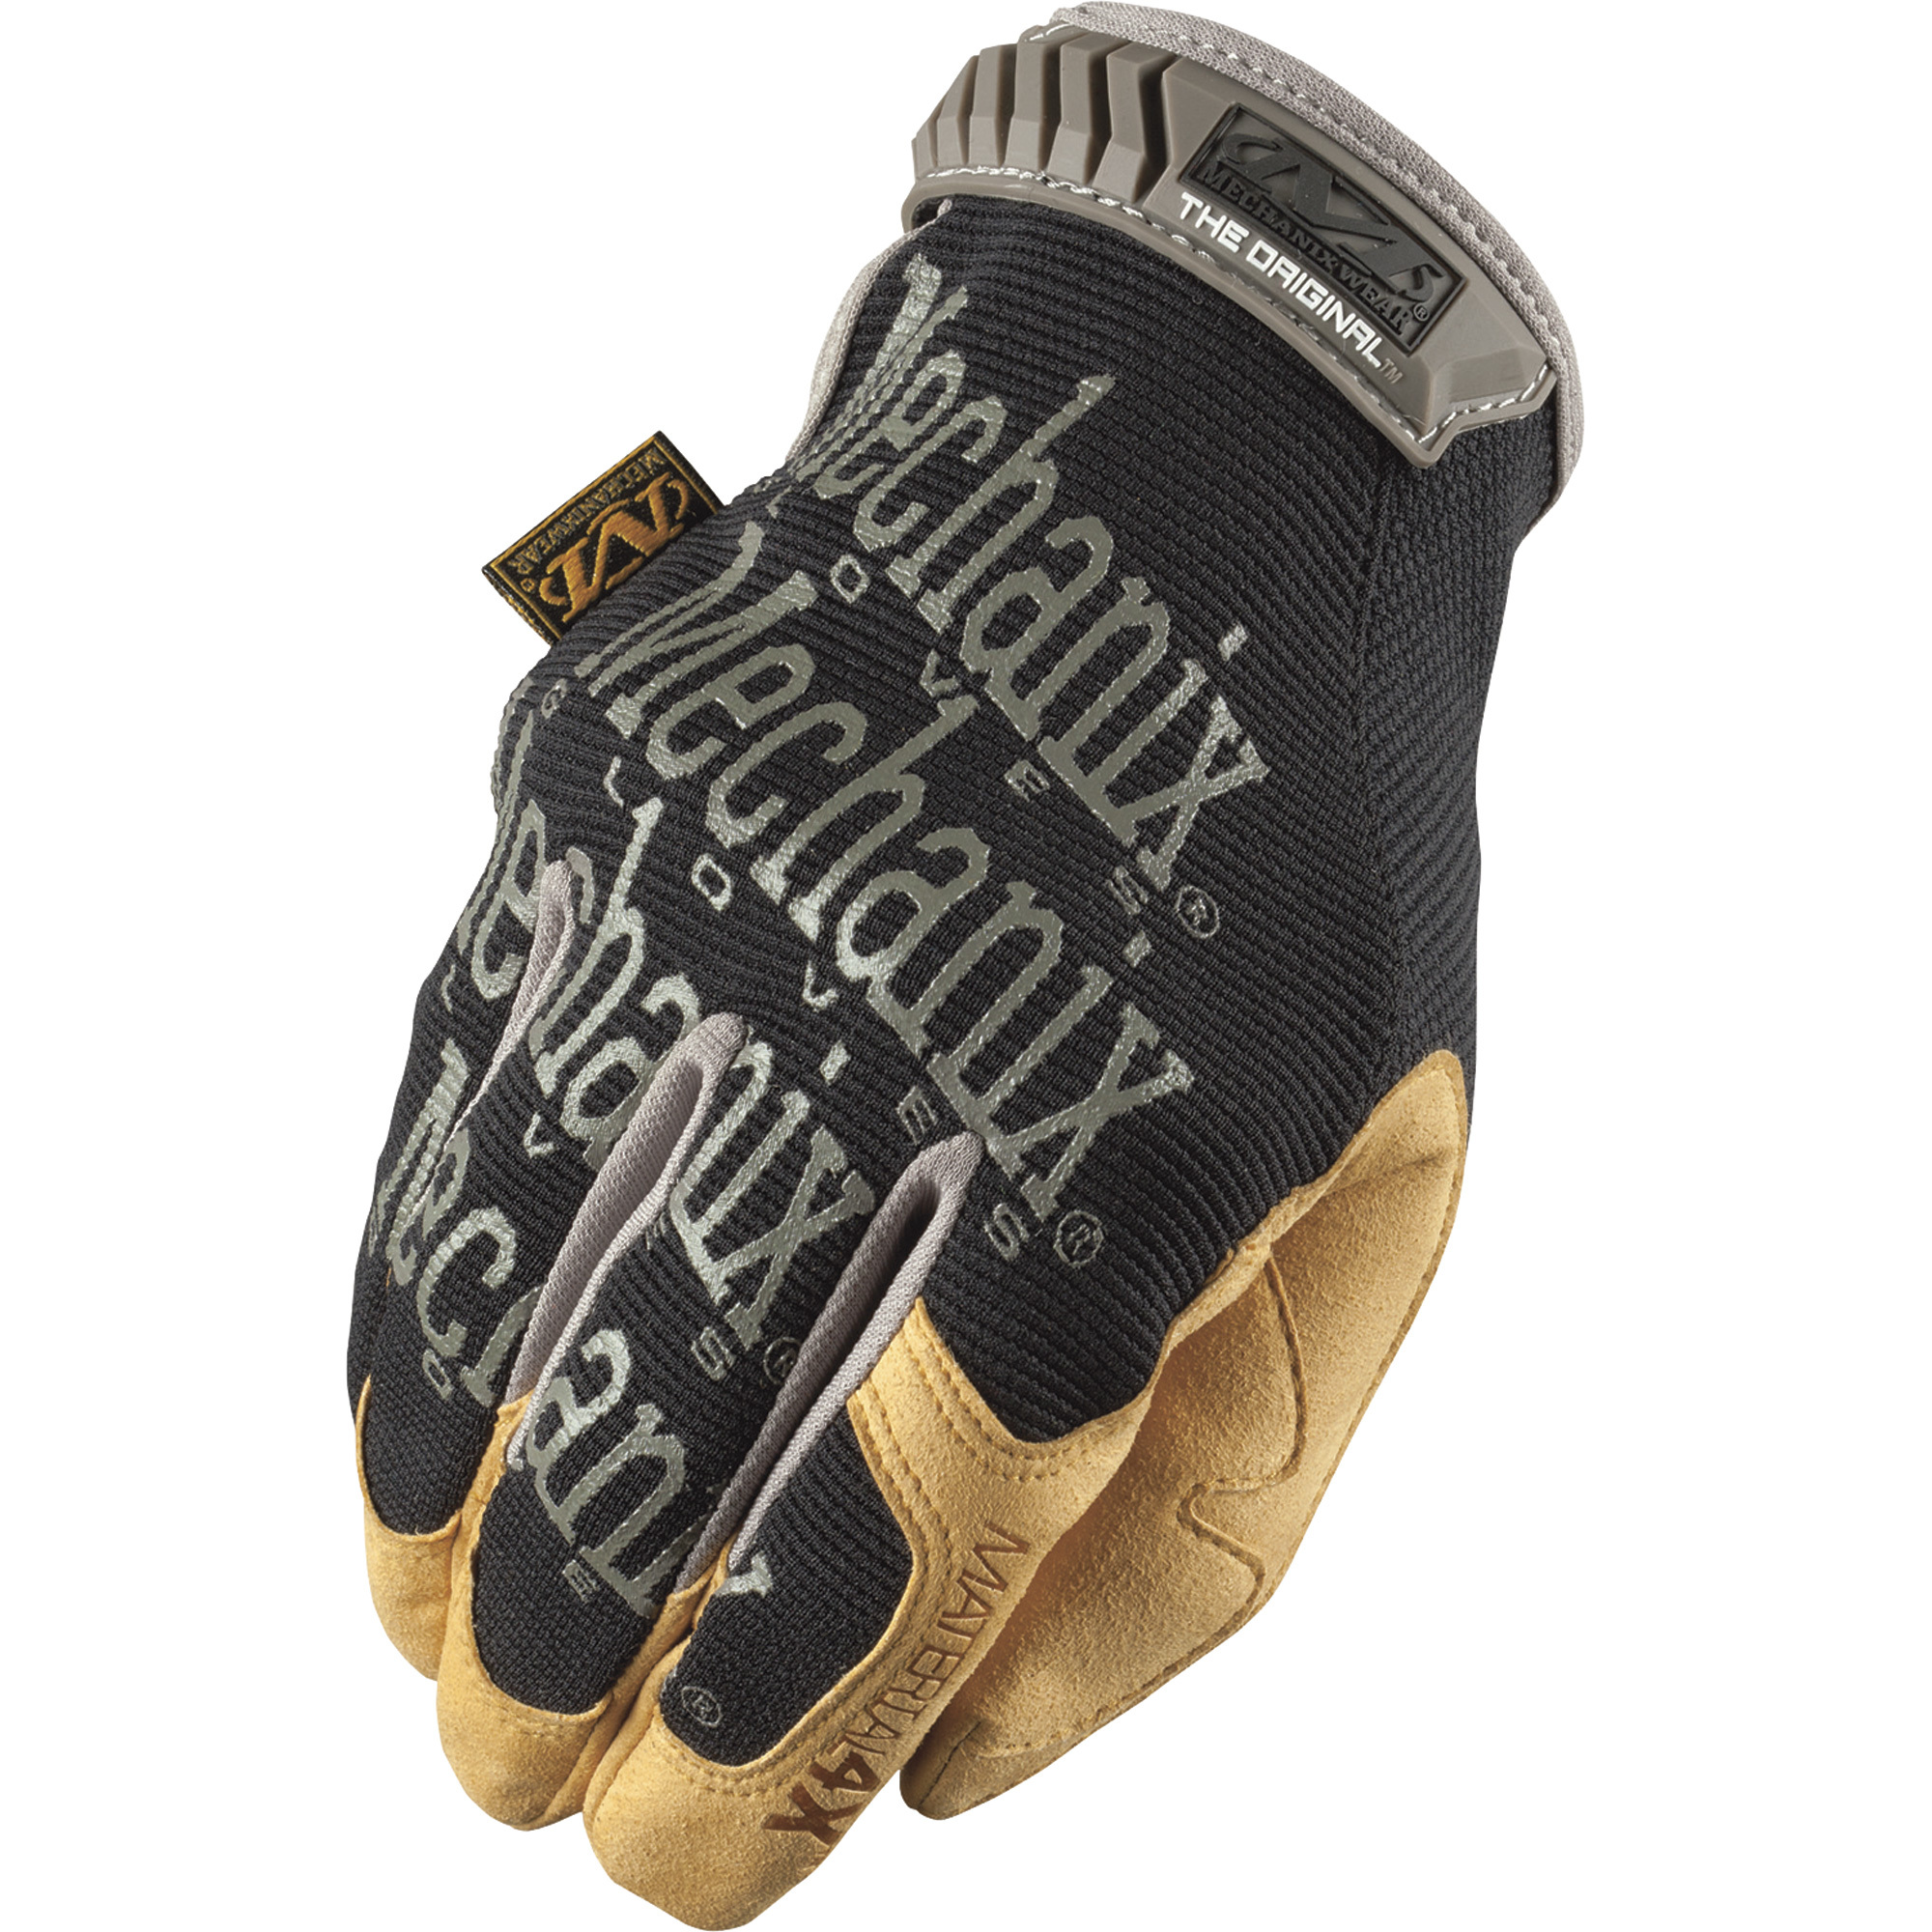 Mechanix Men's Wear Original Material 4X Gloves - Black & Tan, XL, Model MG4X-75